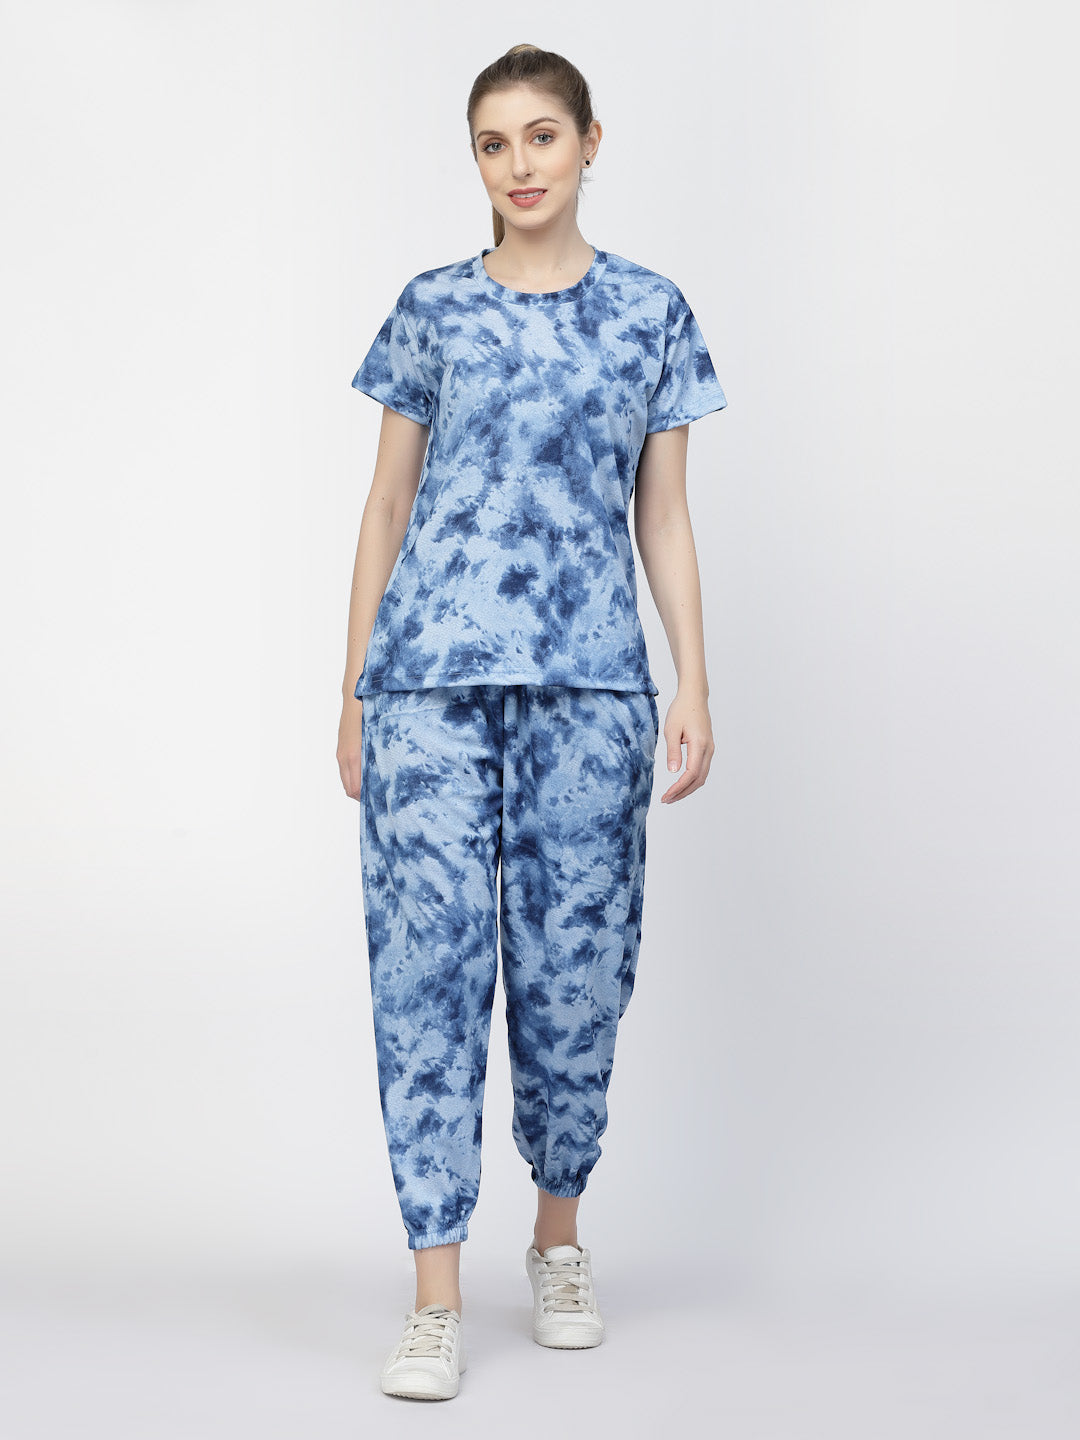 Uzarus Pajama Set for Woman| Animal Print Tie-Dye Night Suit Set| Lounge Wear| Full Pair Set for Women| Outfit for Girls| Nightwear| Tracking| Outdoor Pajama Set